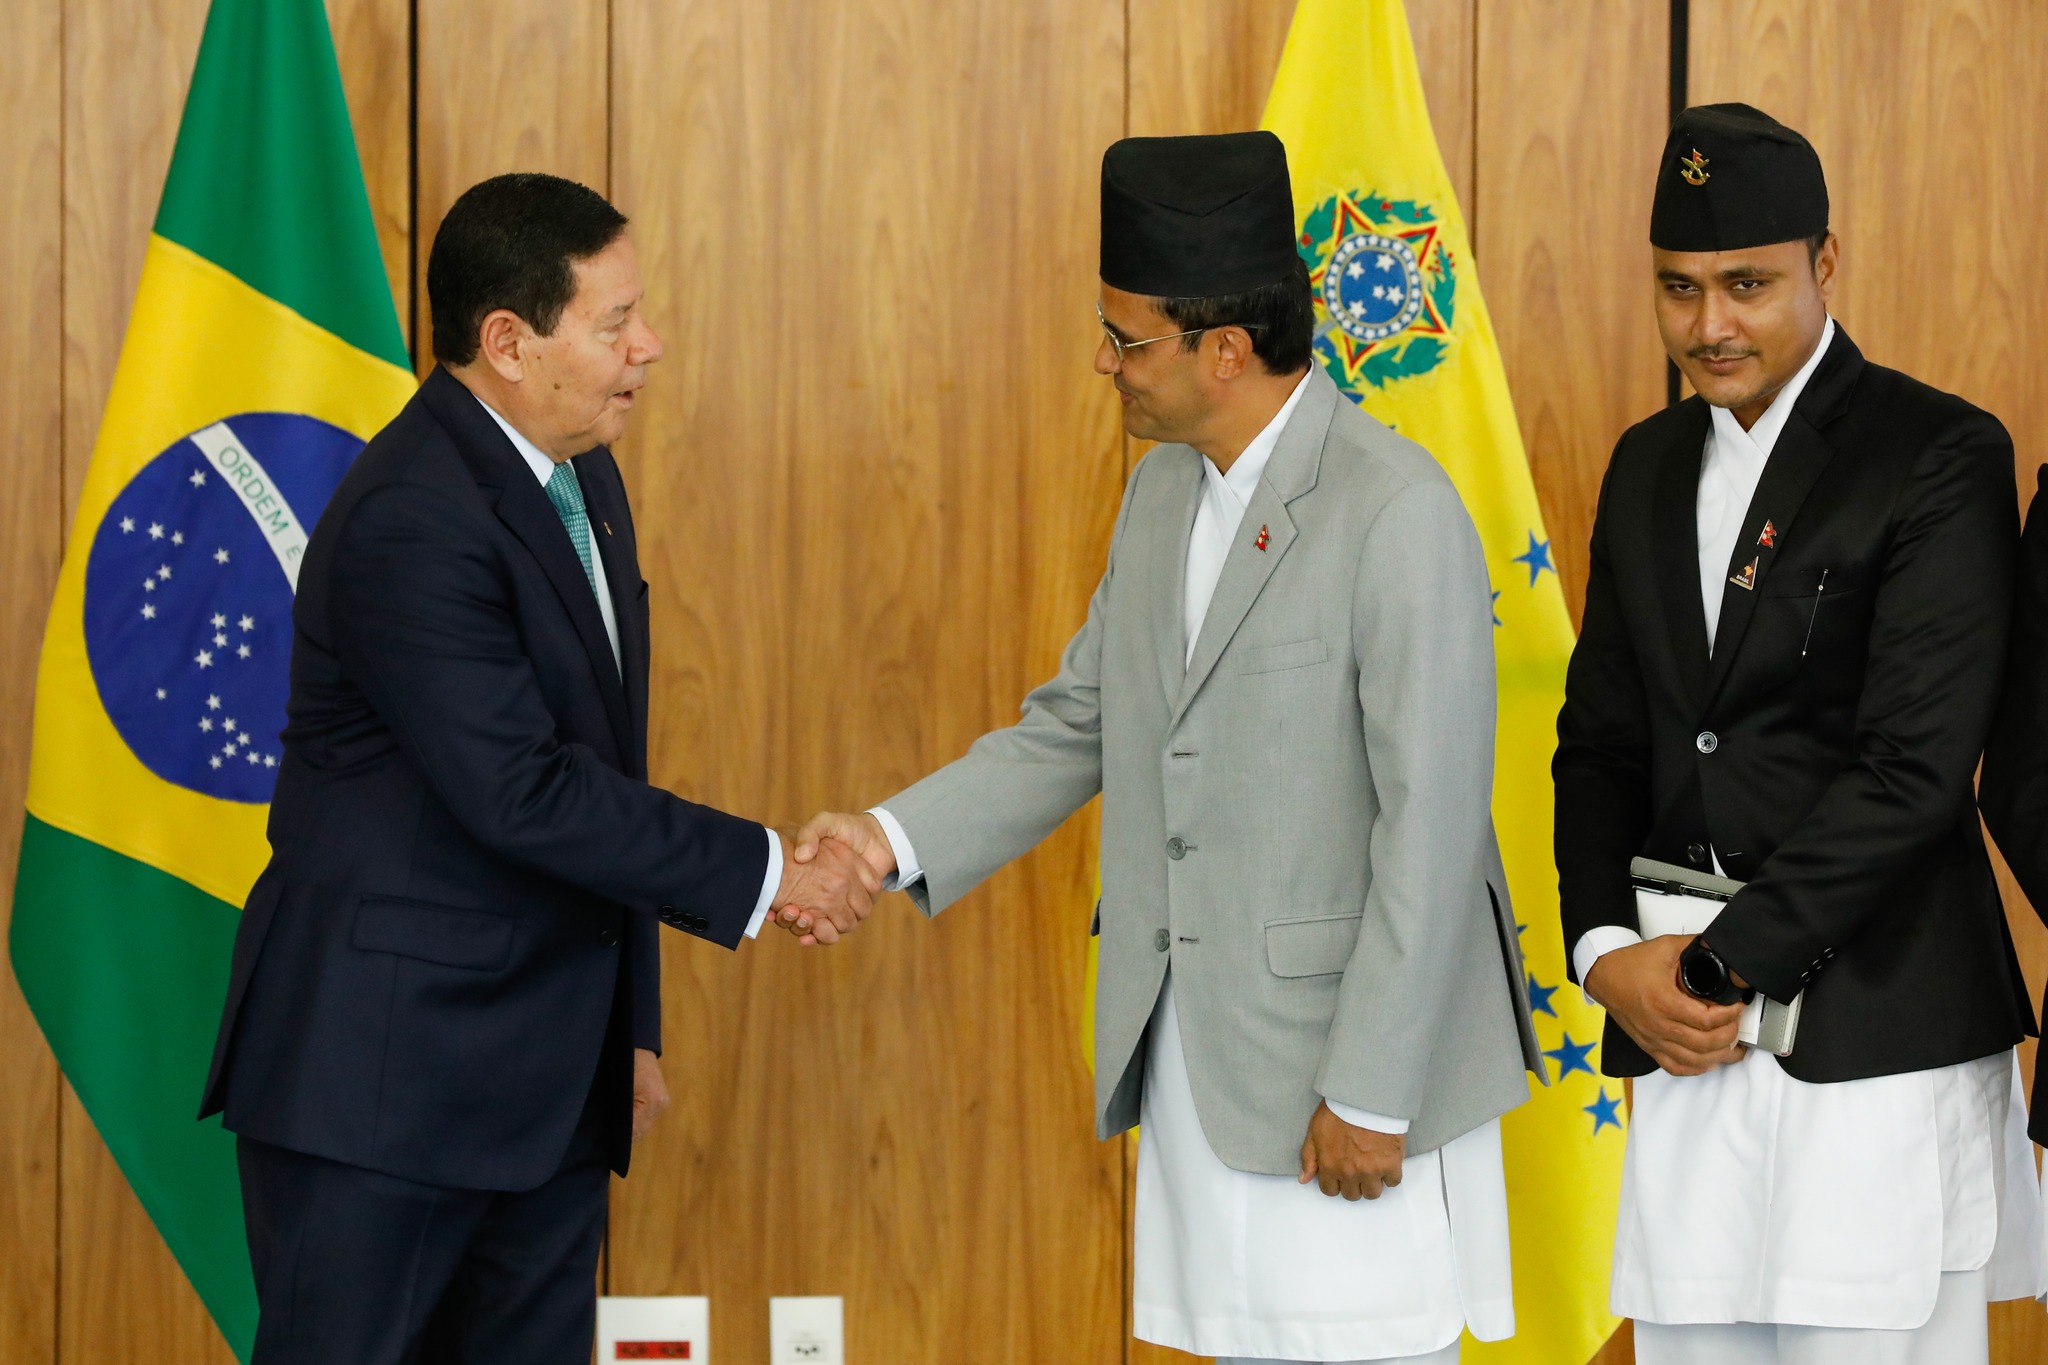 Nepal’s ambassador to Brazil presents credentials